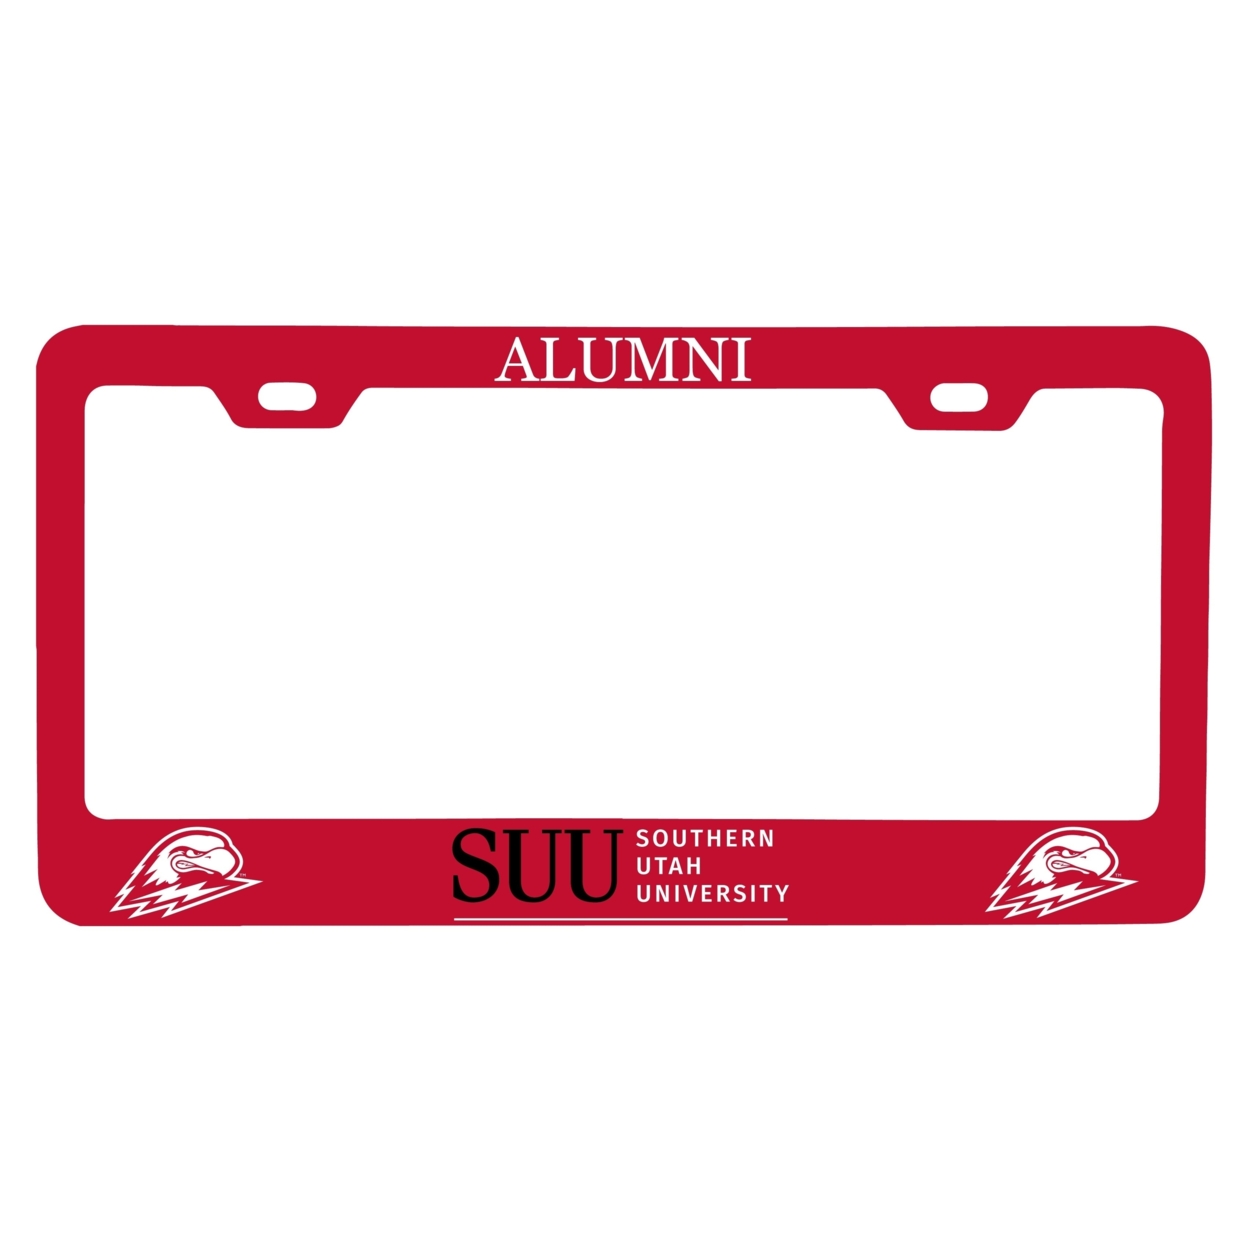 Southern Utah University Alumni License Plate Frame